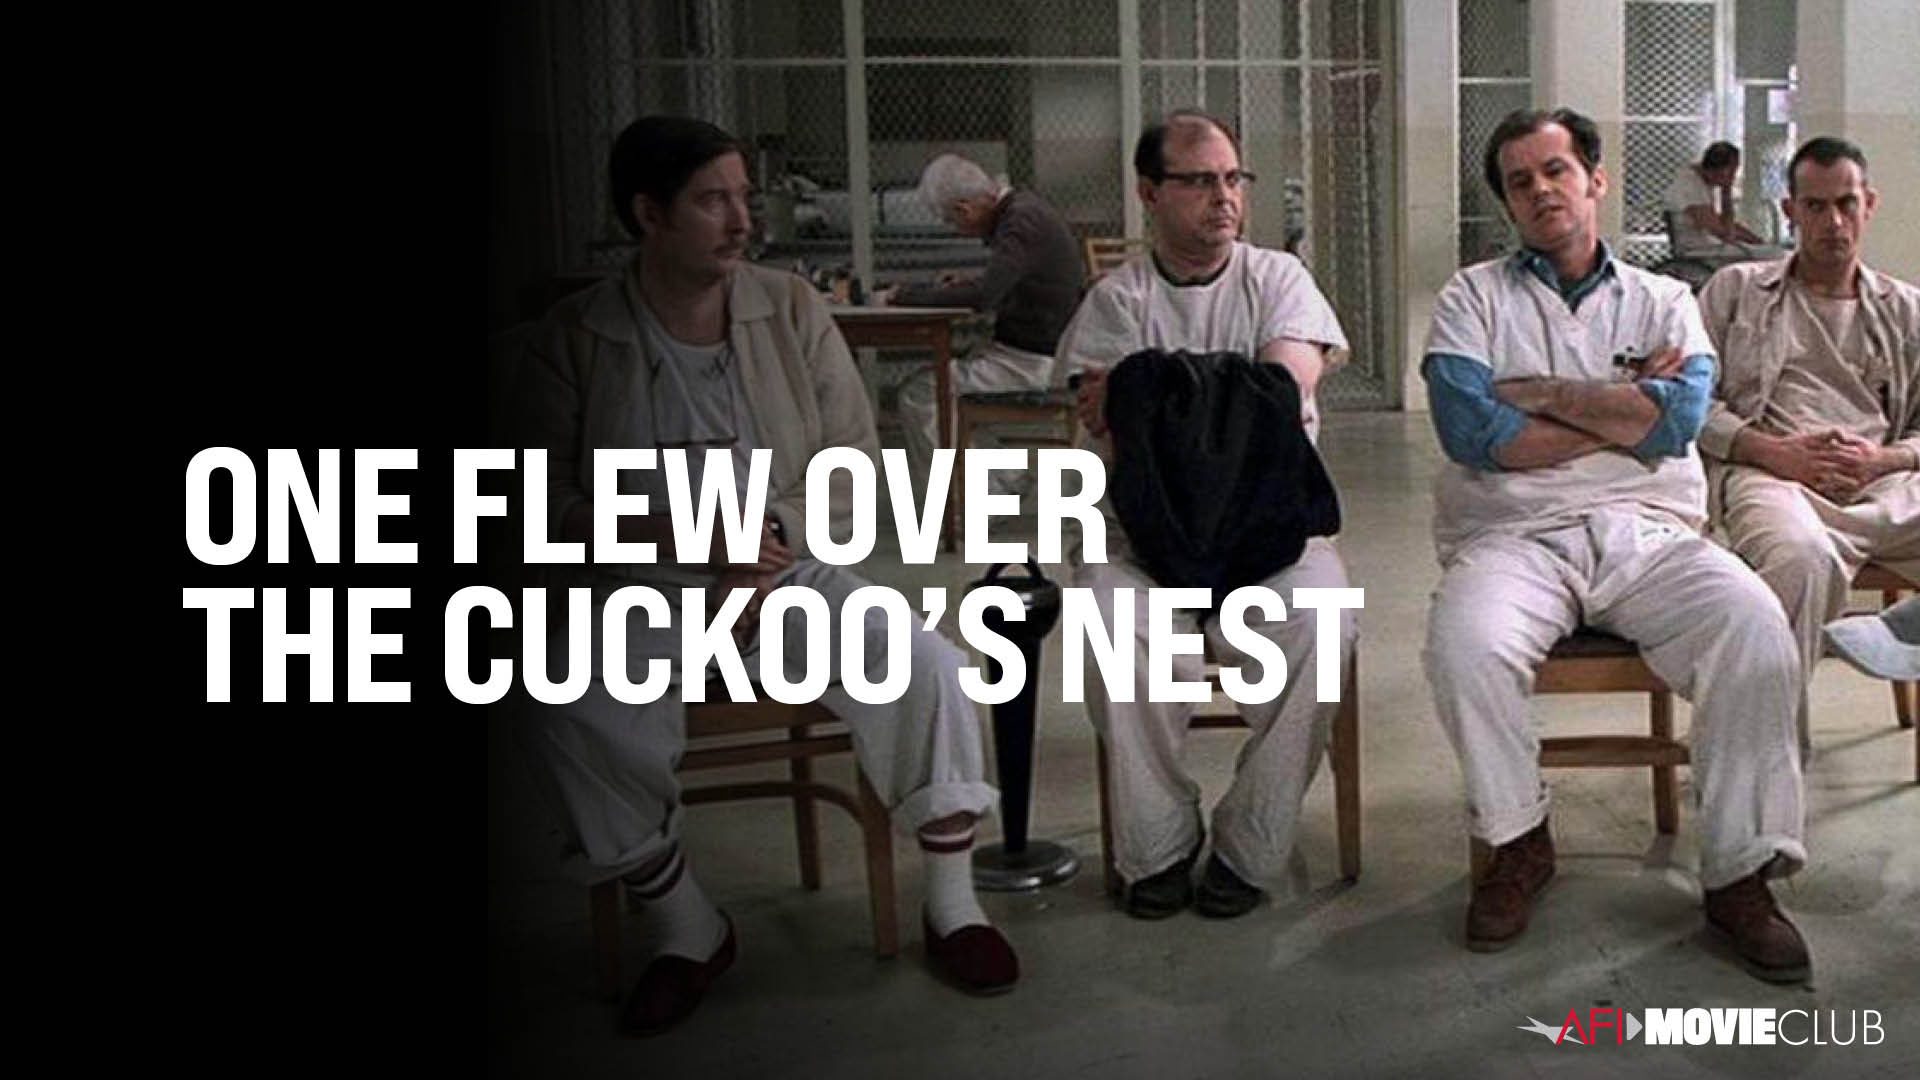 One Flew Over the Cuckoo's Nest Film Still - Jack Nicholson, Christopher Lloyd, Mwako Cumbuka, Sydney Lassick, and William Redfield